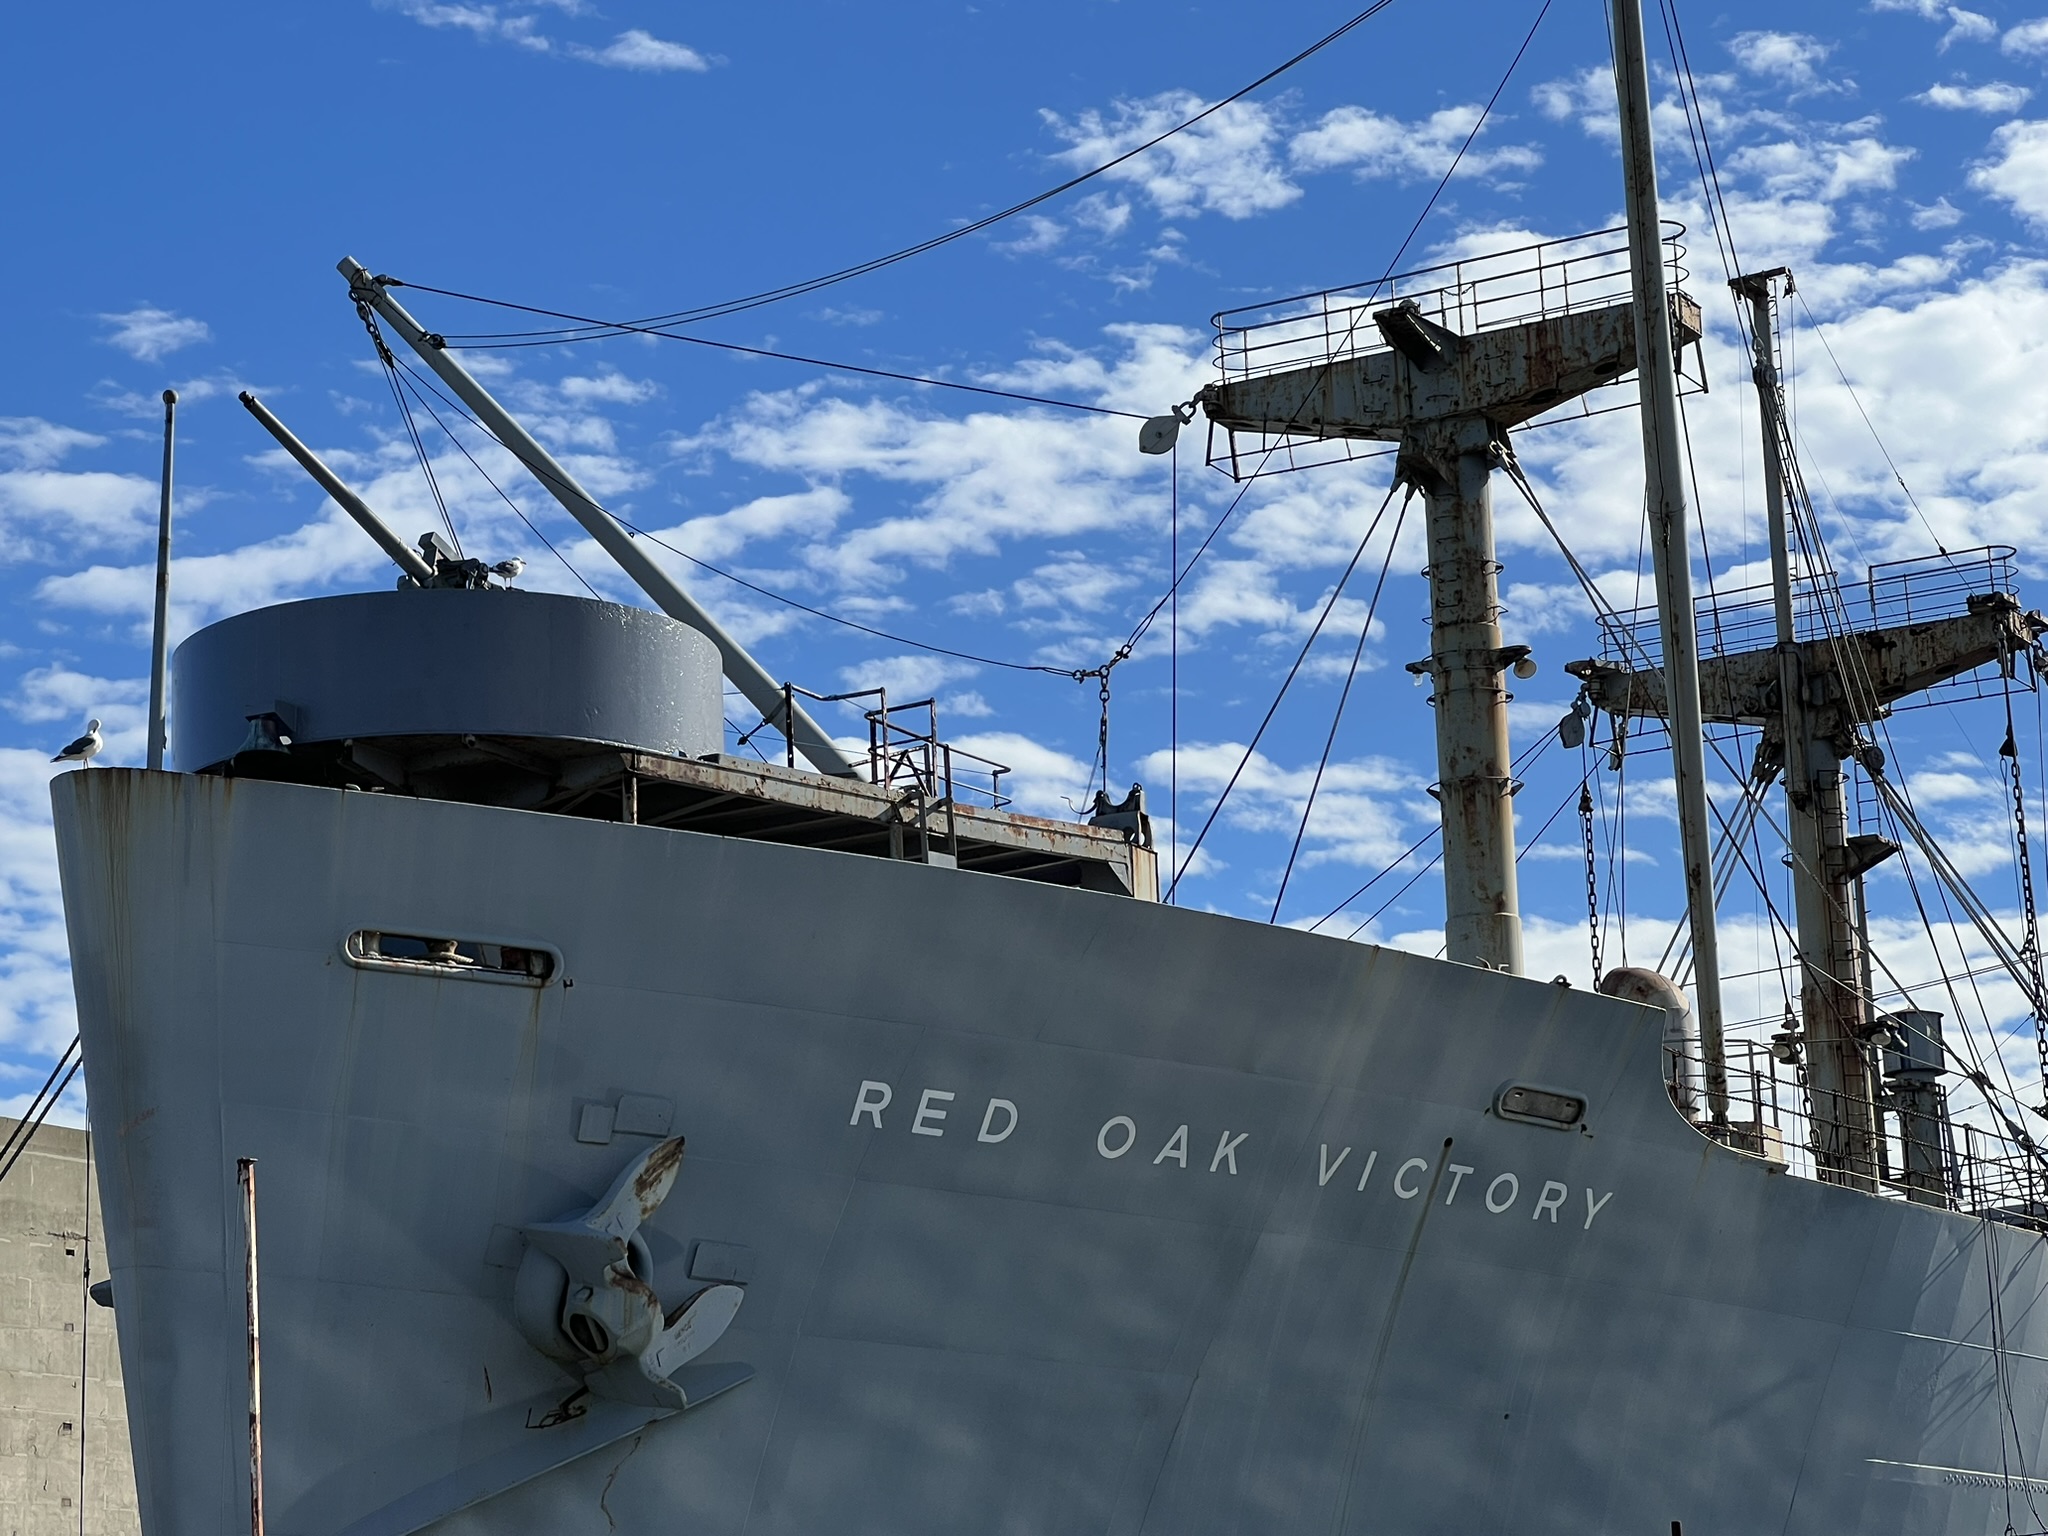 SS Red Oak Victory 舰首